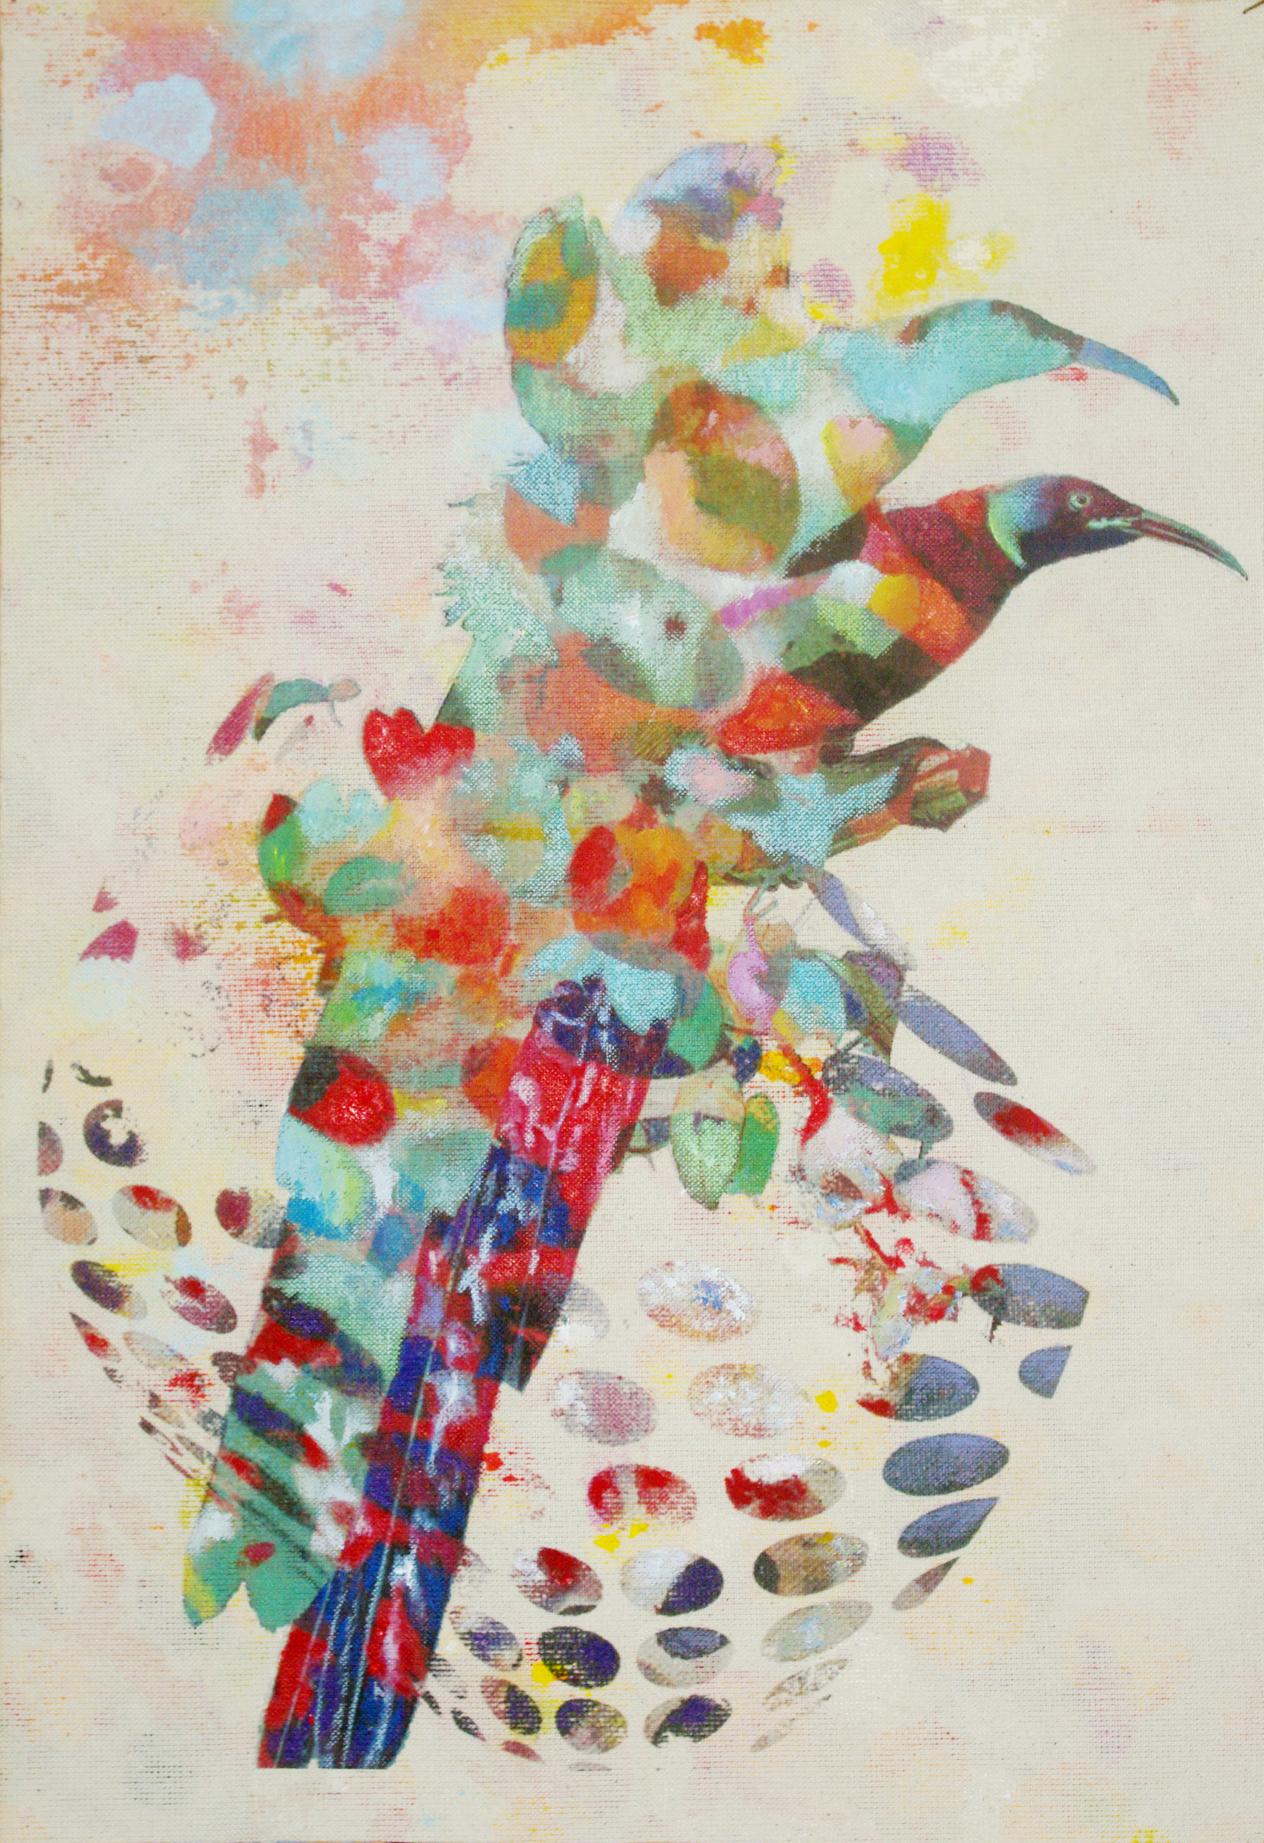 Birds 007- Contemporary, Abstract, Expressionist, Modern, Street art, Surrealist - Mixed Media Art by Francisco Nicolás